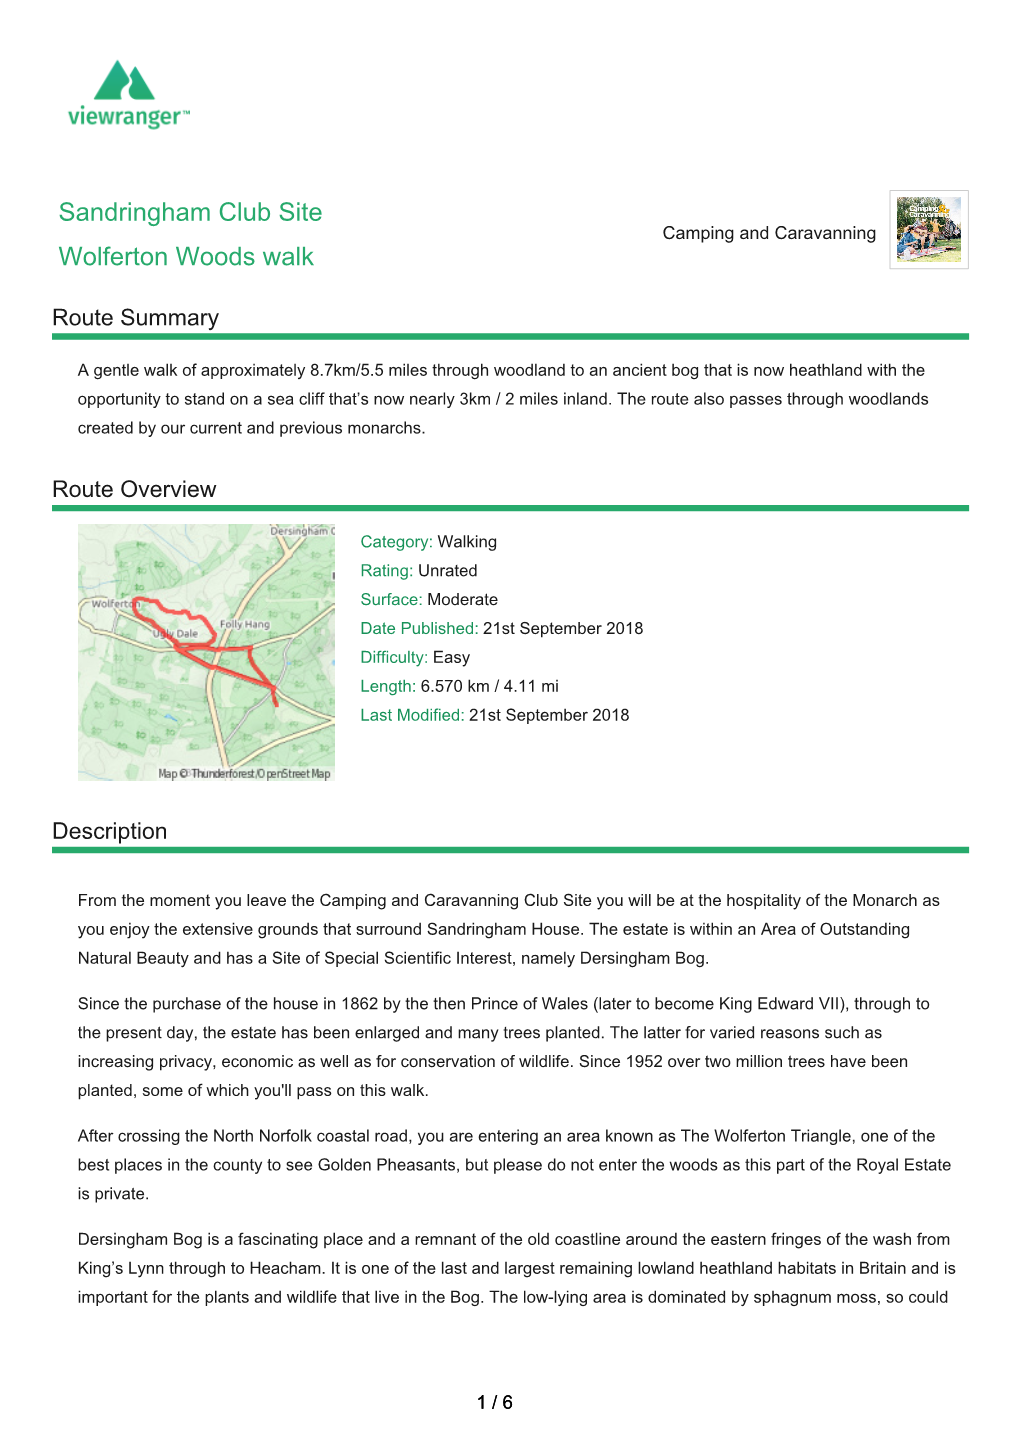 Sandringham Club Site Wolferton Woods Walk